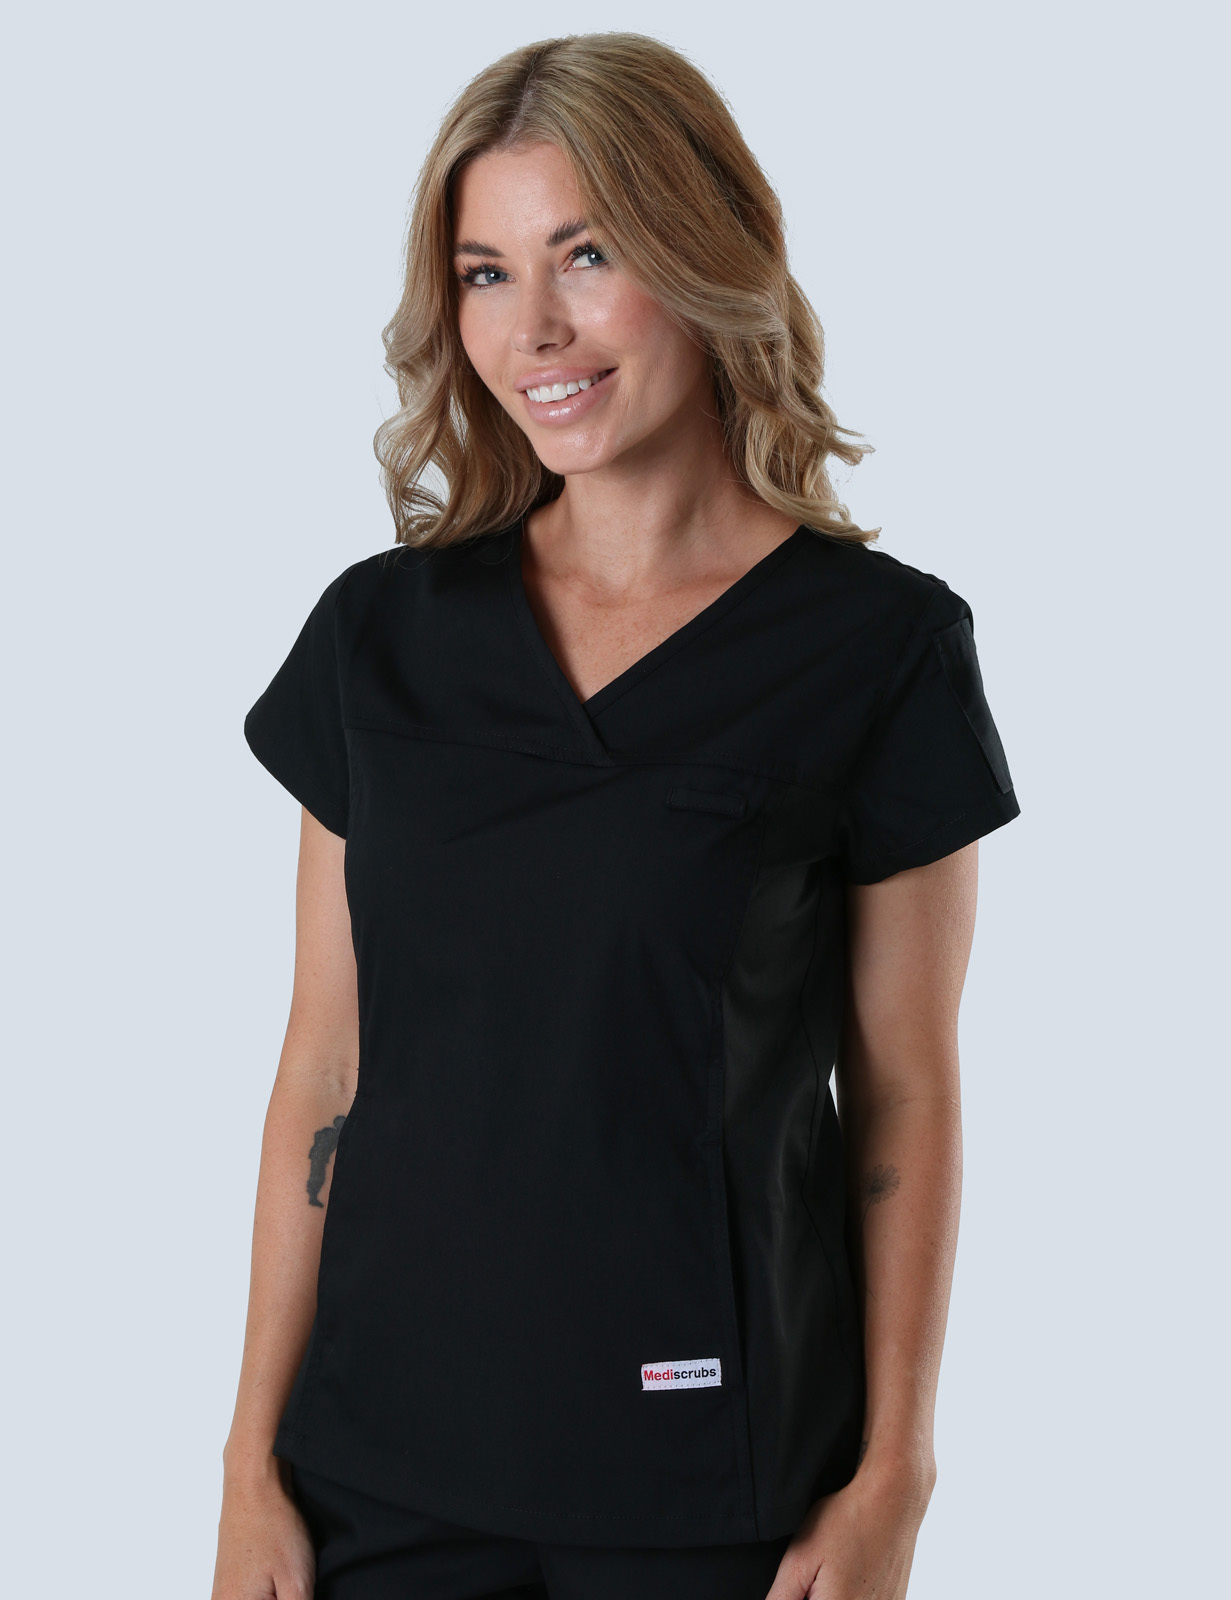 Ashmore Retreat Endorsed Enrolled Nurse Top Only Bundle (Women's Fit Spandex in Black incl Logo) 